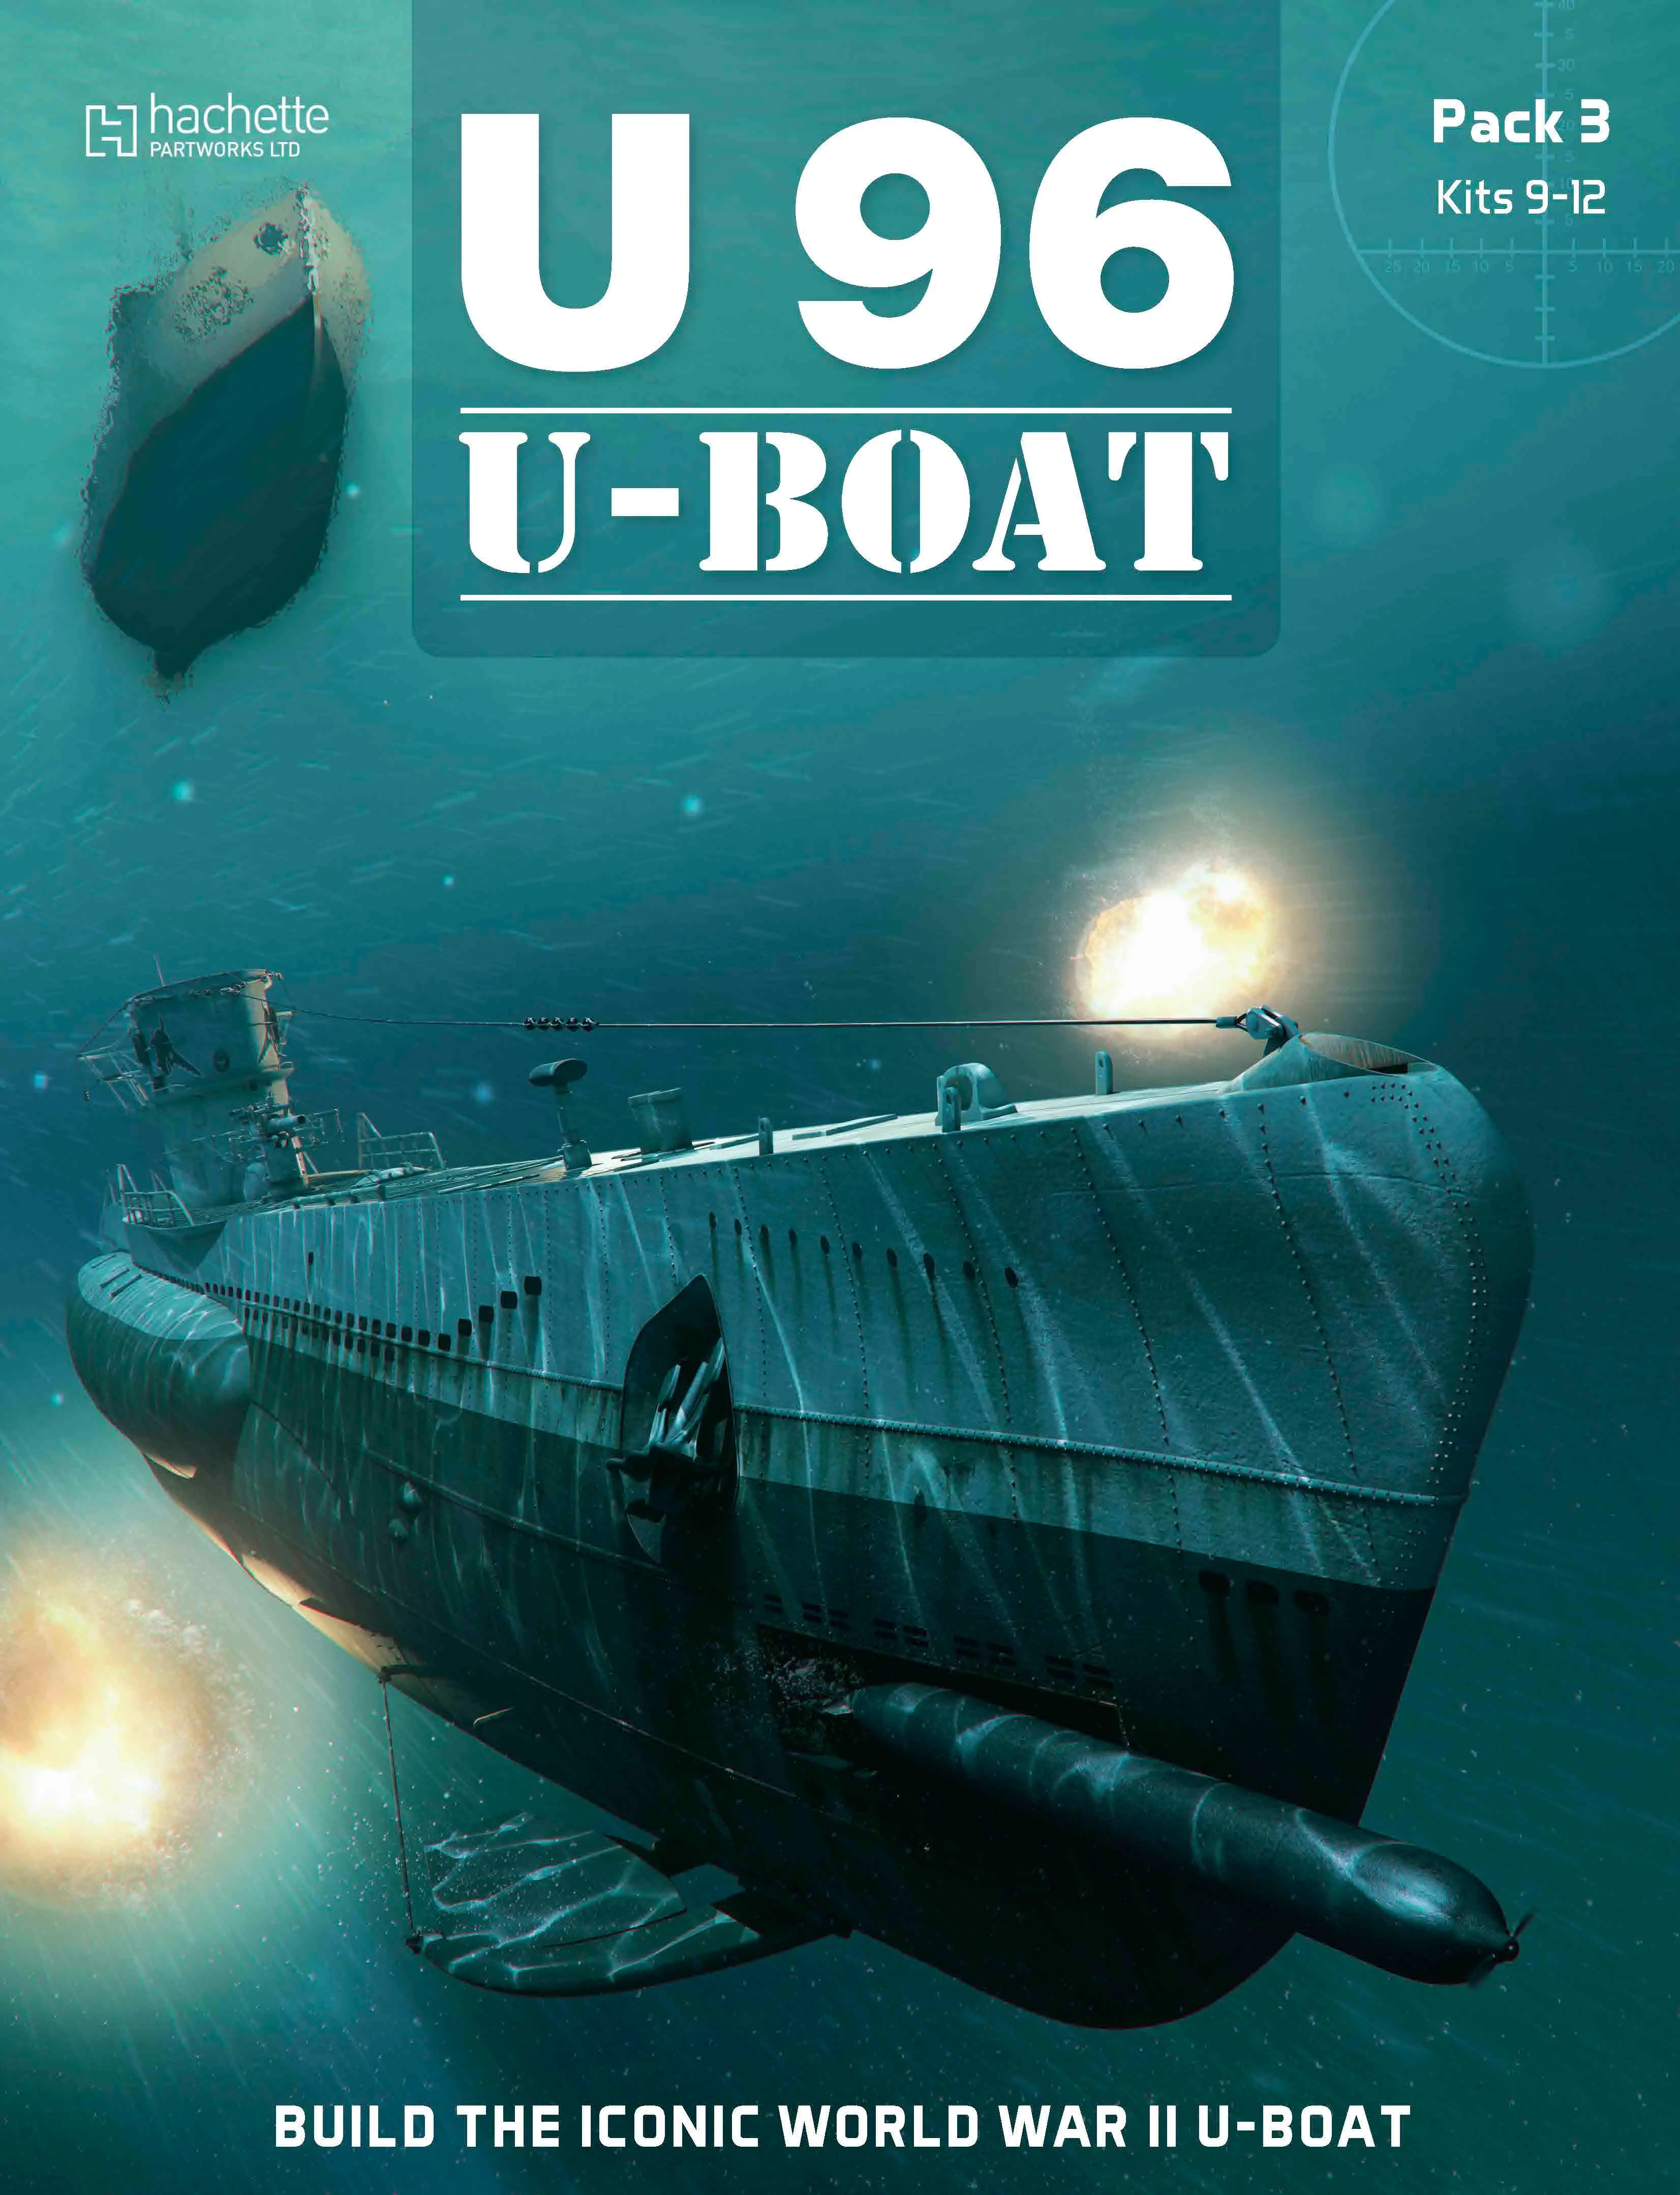 The U 96 U-BOAT